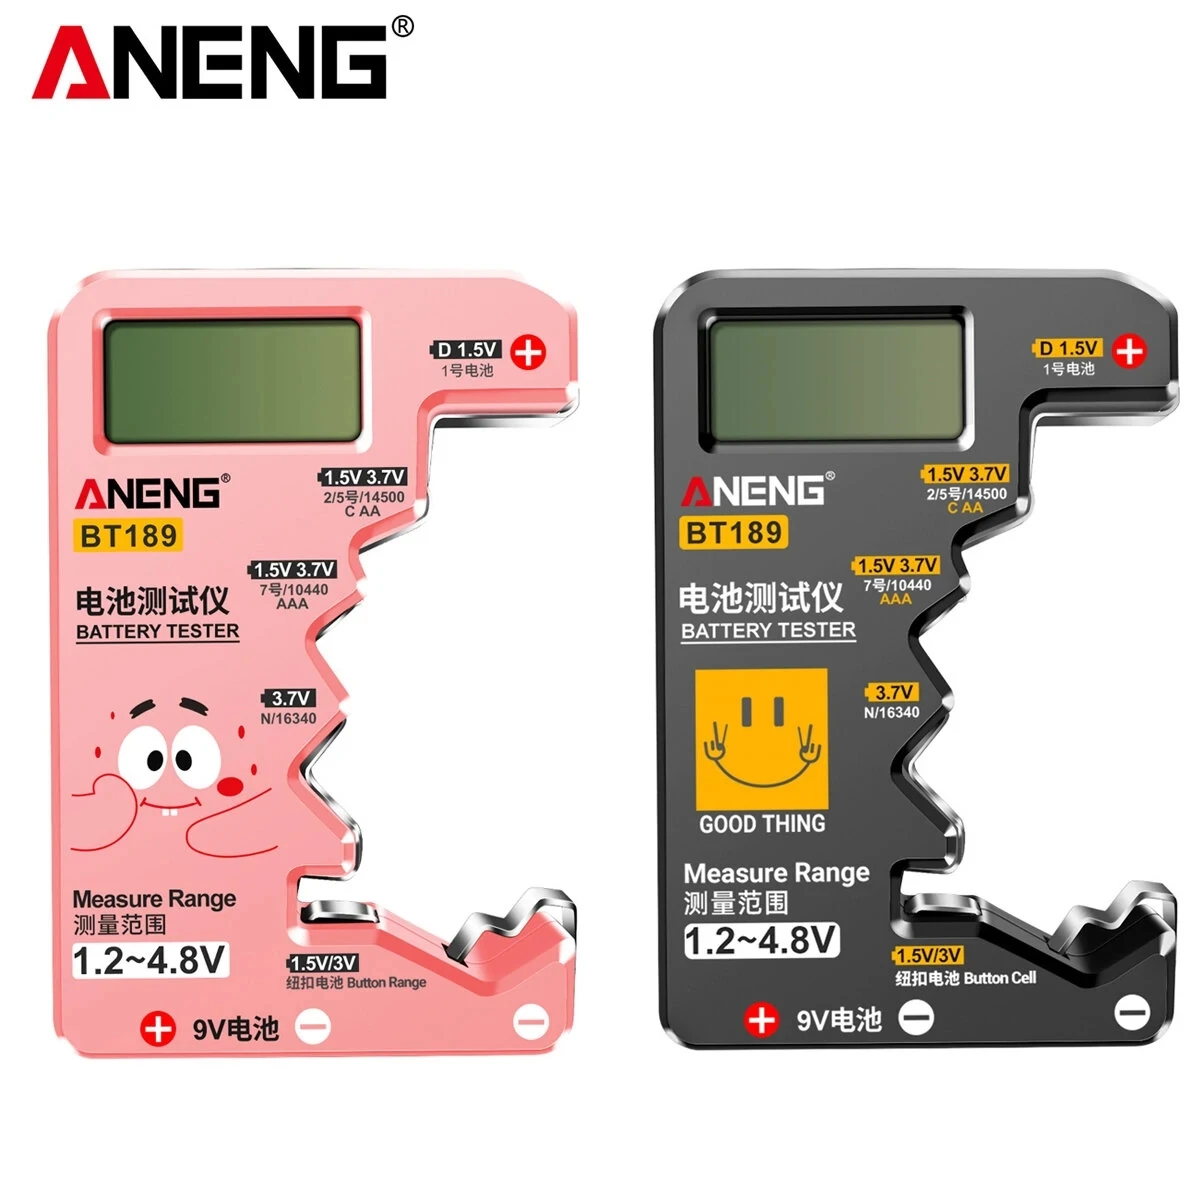 

ANENG BT189 Digital Battery Tester LCD Display AA AAA 9V 1.5V 3V Button Battery Capacity Checker Load Analyzer - Pink